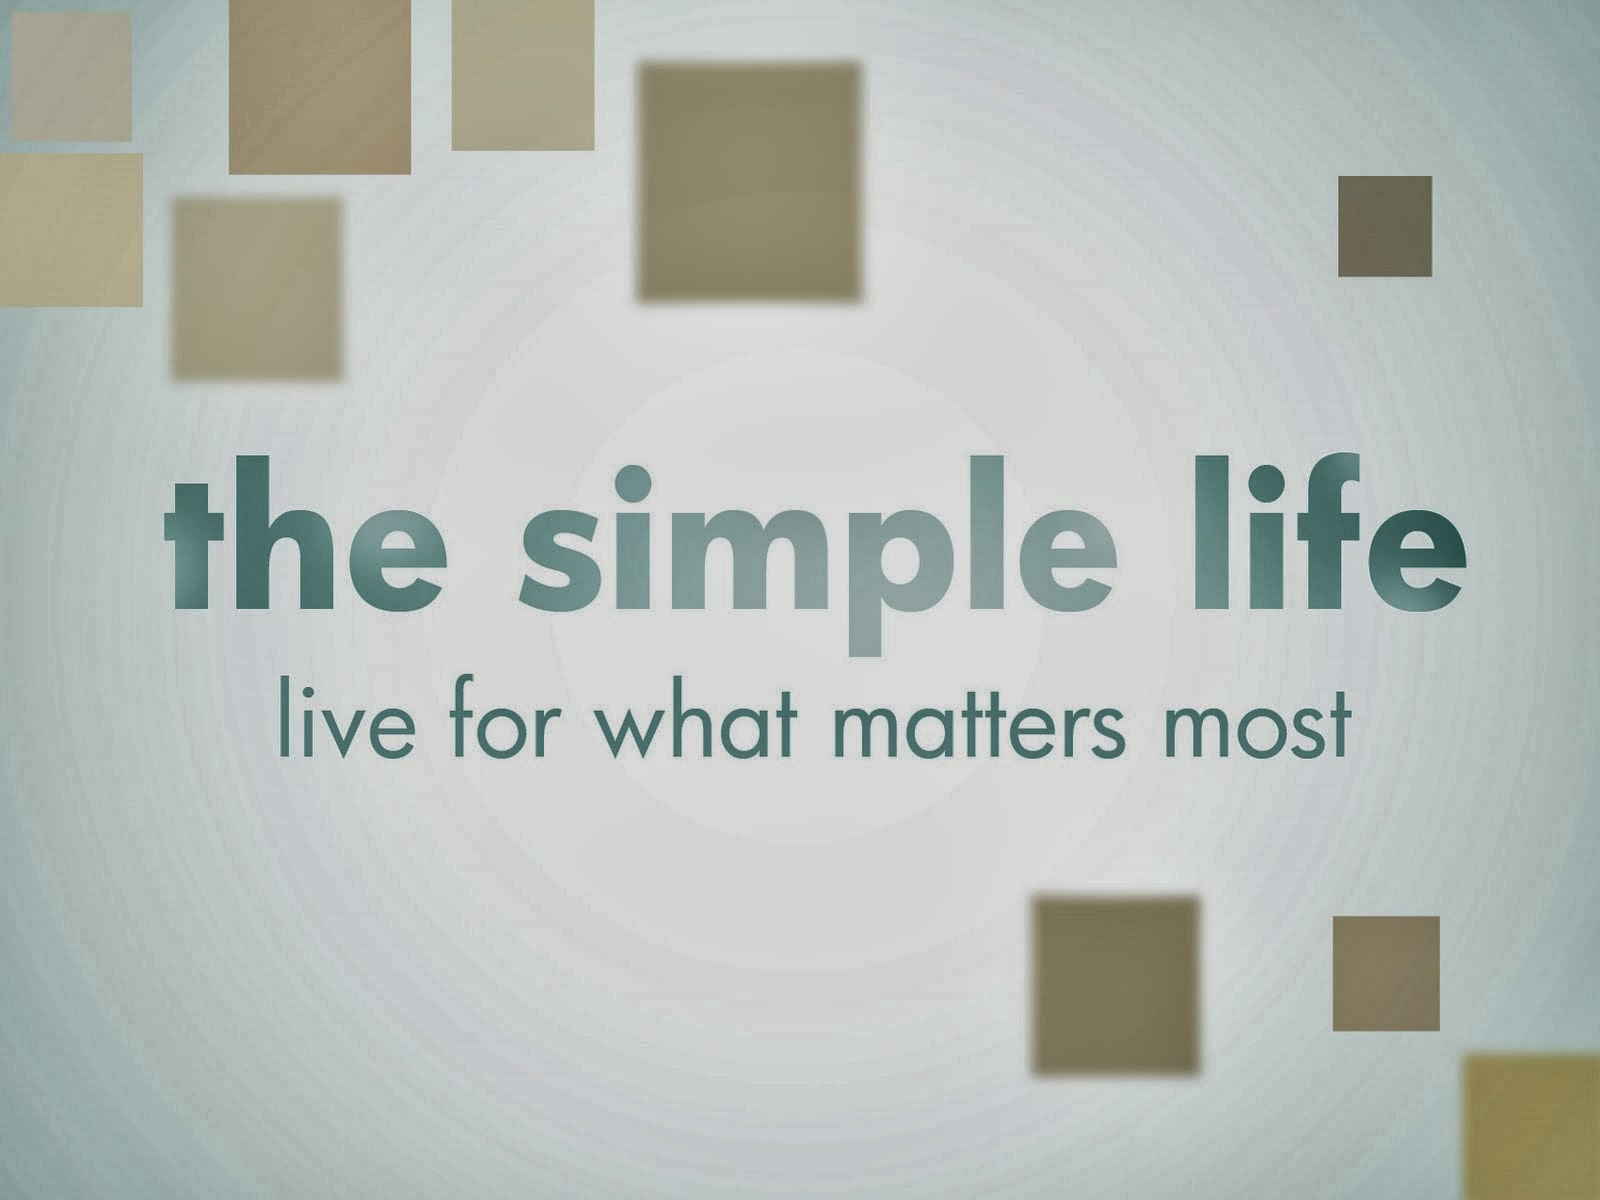 My simple life. Simple Life. Simple Life авторы. Simple Life перевод. Simple for Life бренд.